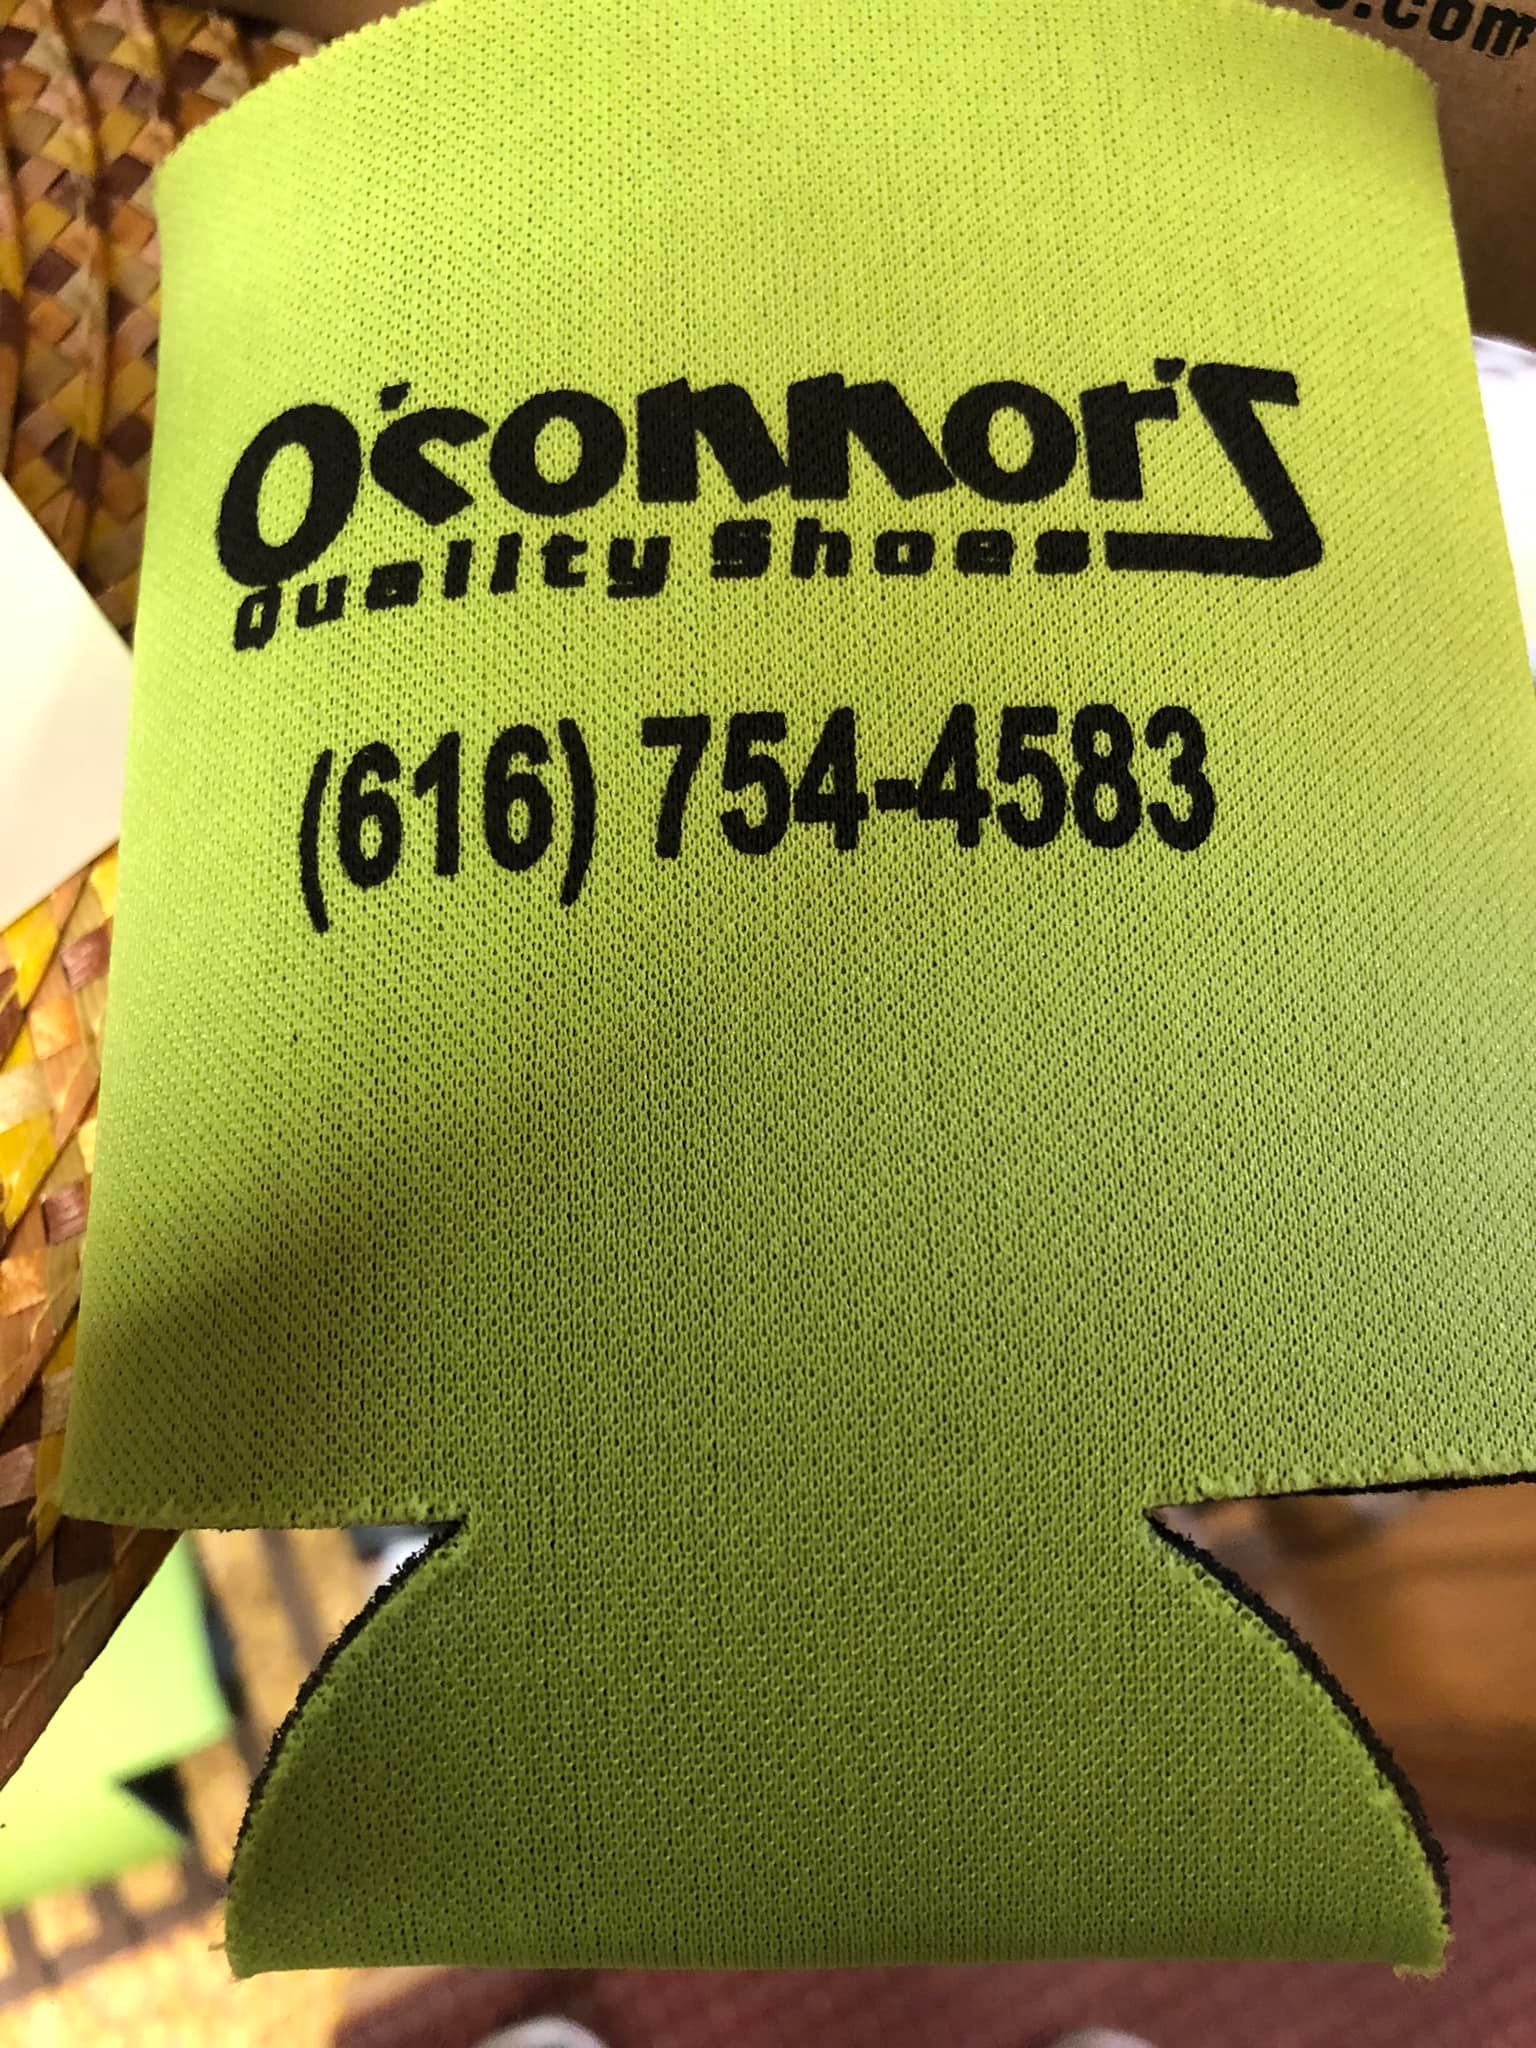 O'Connor Shoe Store